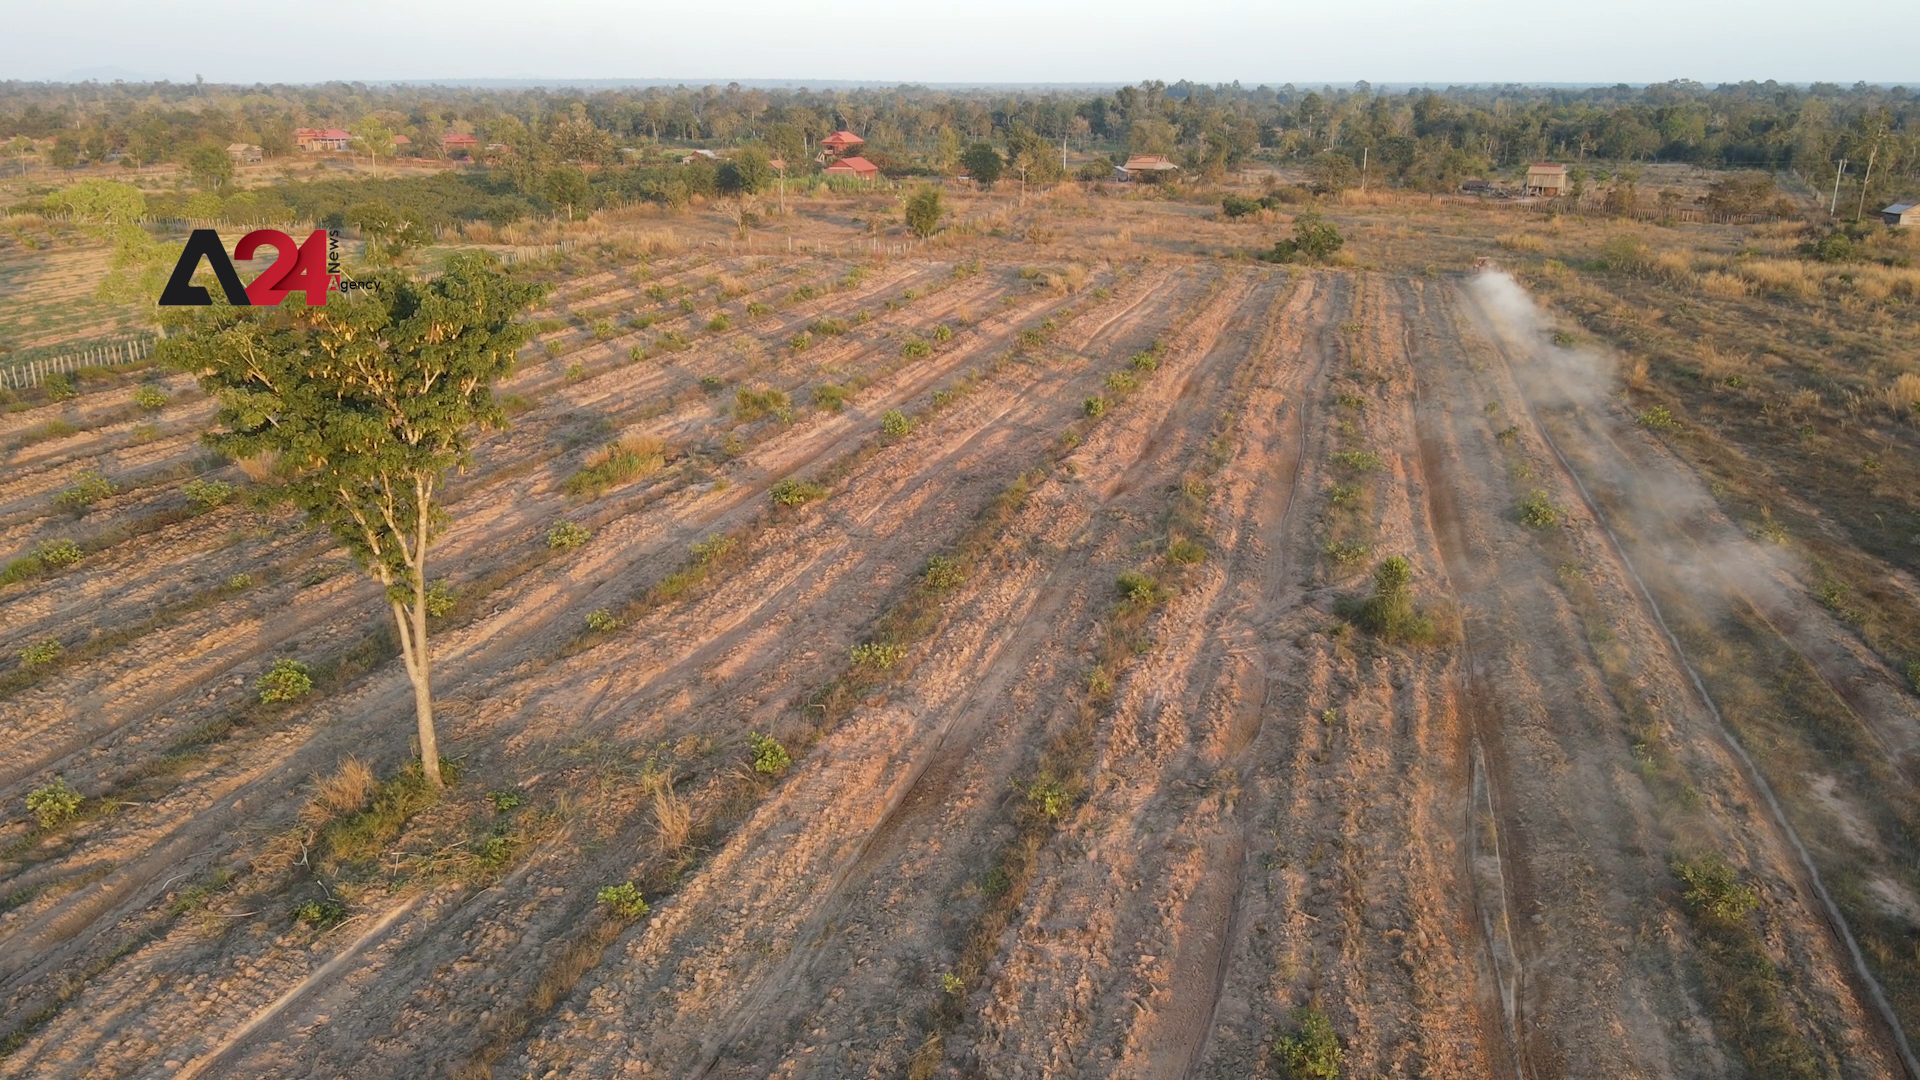 Cambodia – Cambodian farmers adopt ingenious ways to stem deforestation